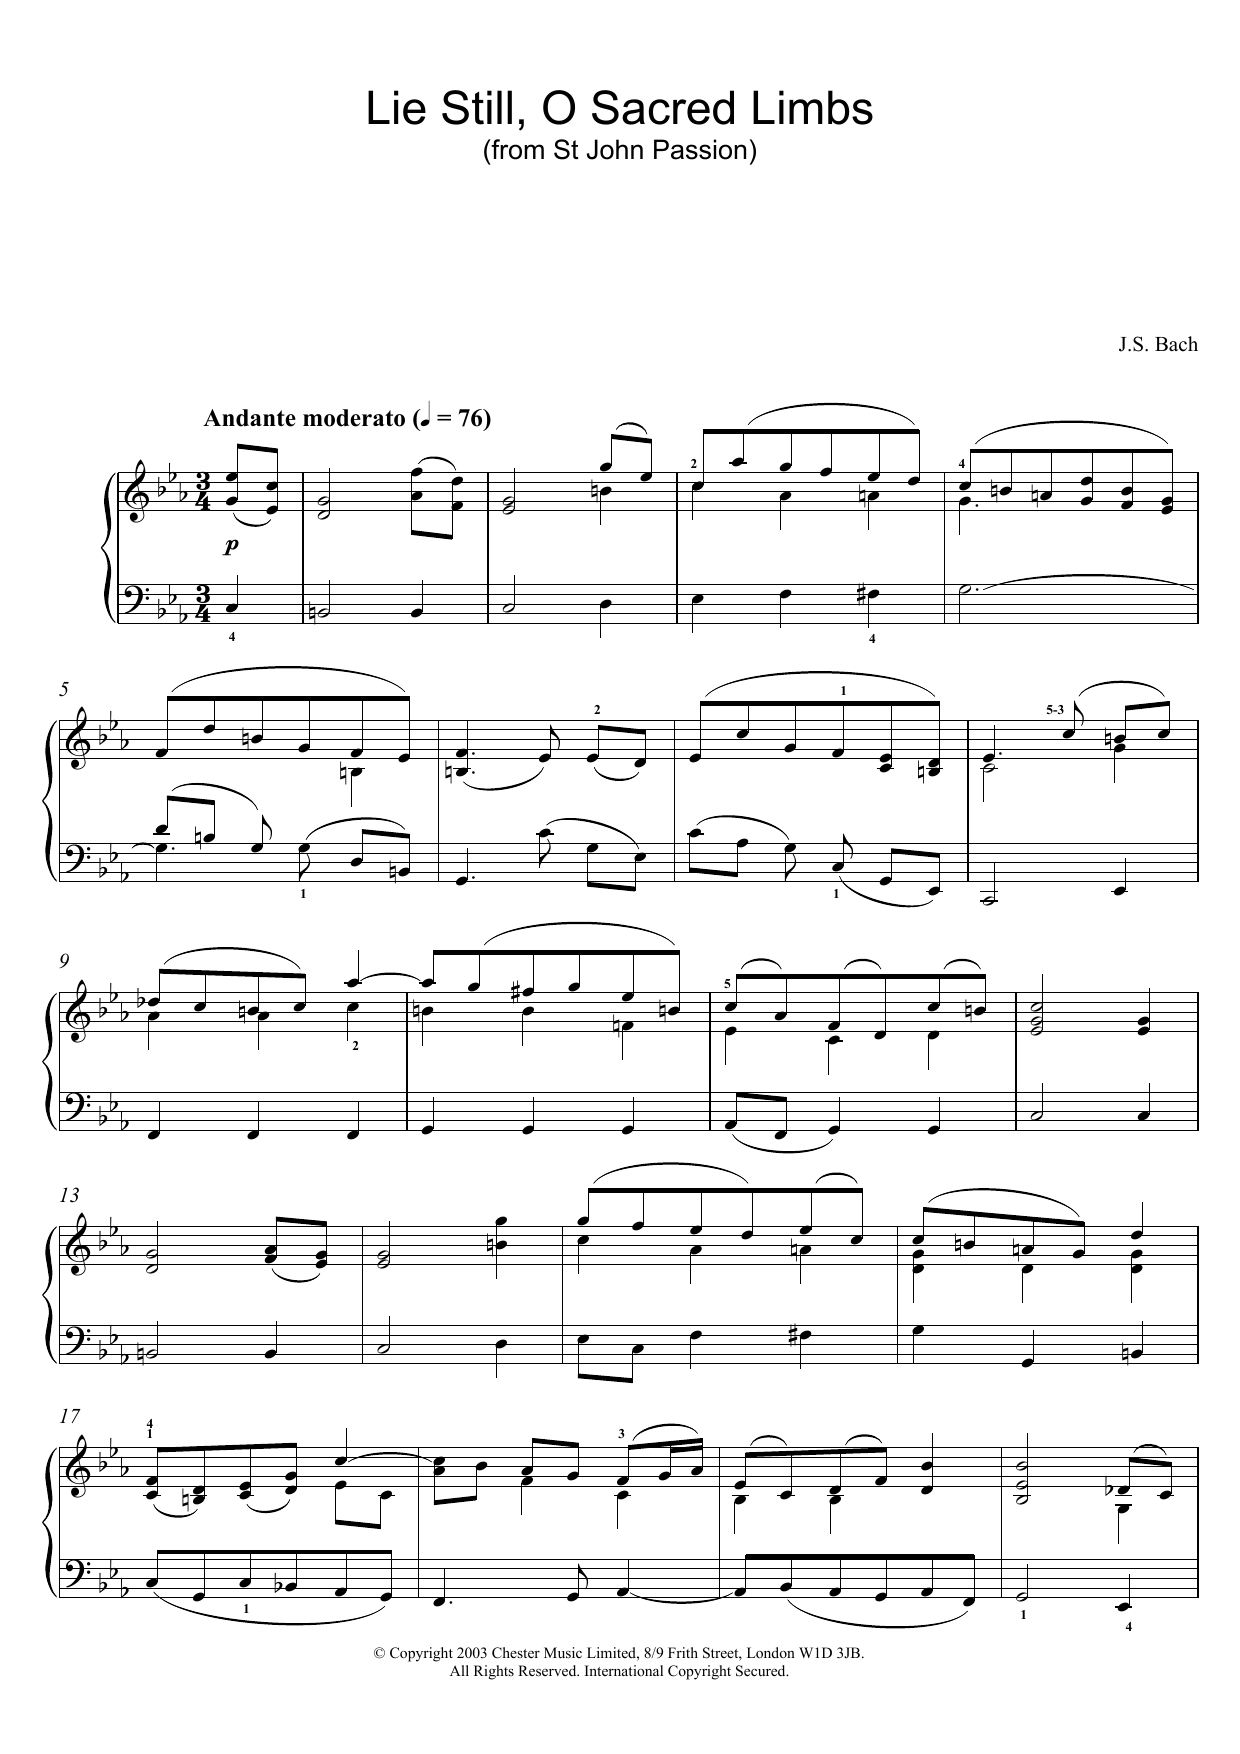 Johann Sebastian Bach Lie Still, O Sacred Limbs (from St John Passion) Sheet Music Notes & Chords for Piano - Download or Print PDF